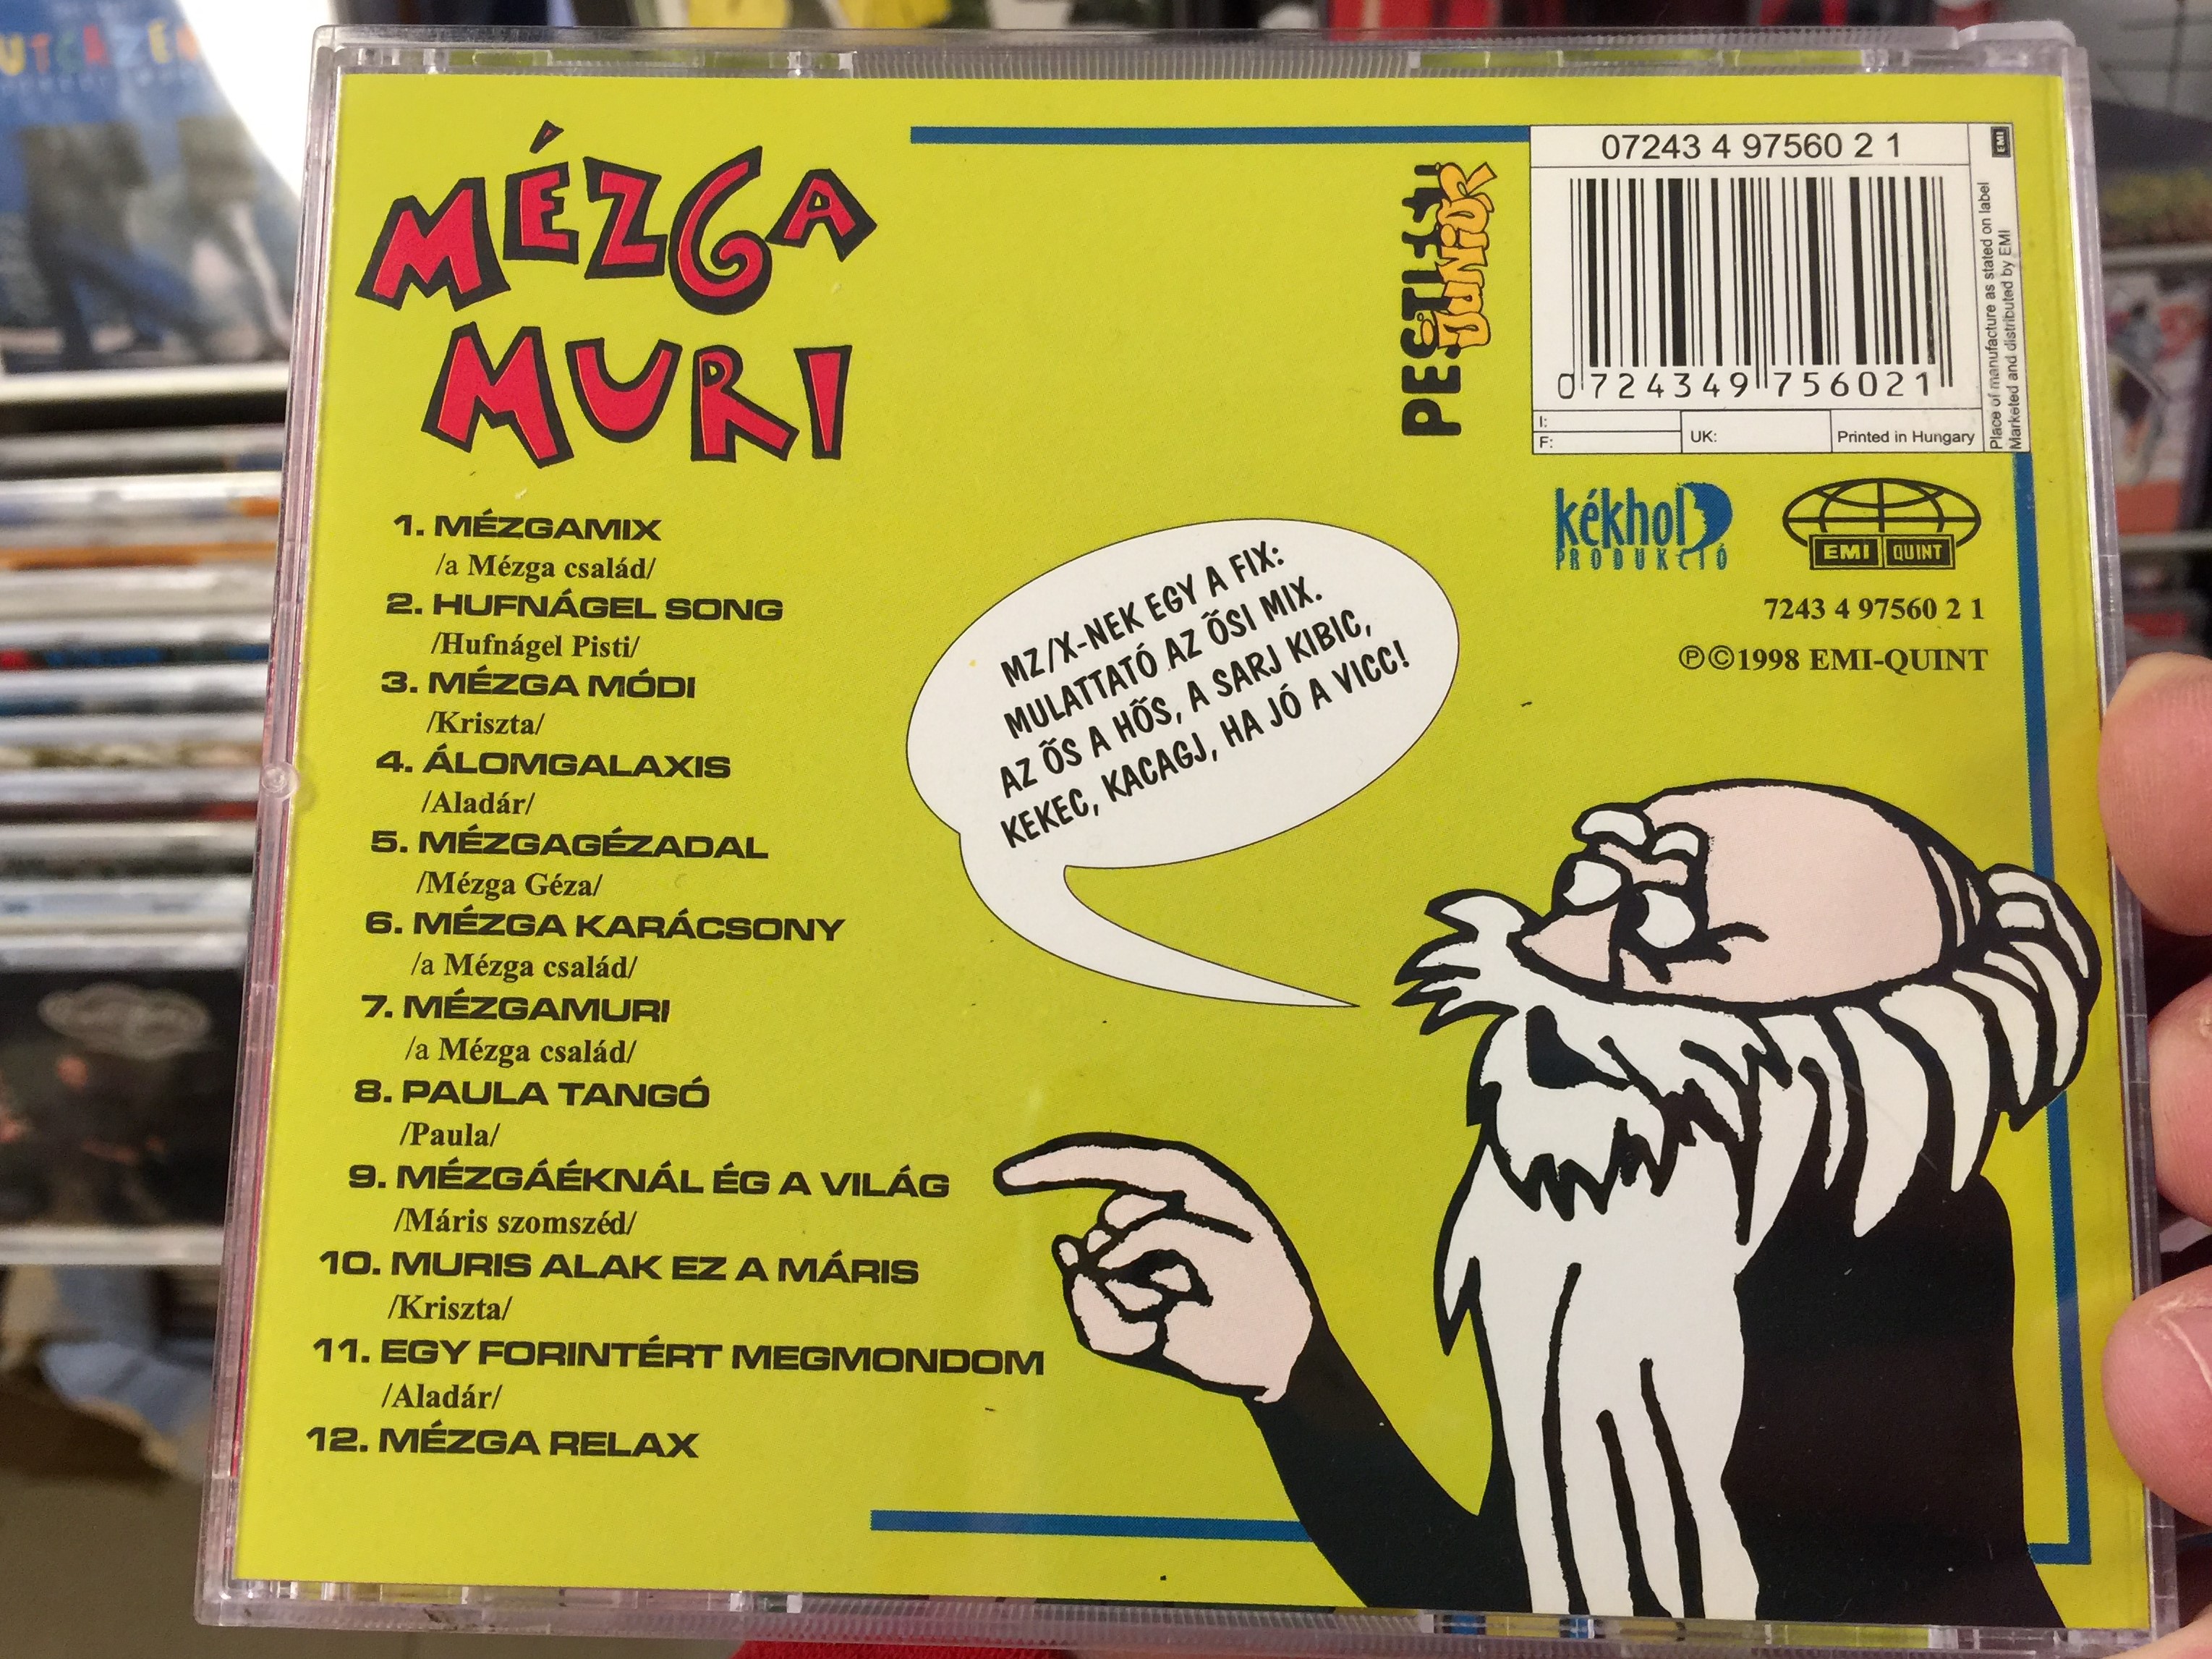 -m-zga-csal-d-m-zgamuri-audio-cd-1998-emi-quint-2-.jpg